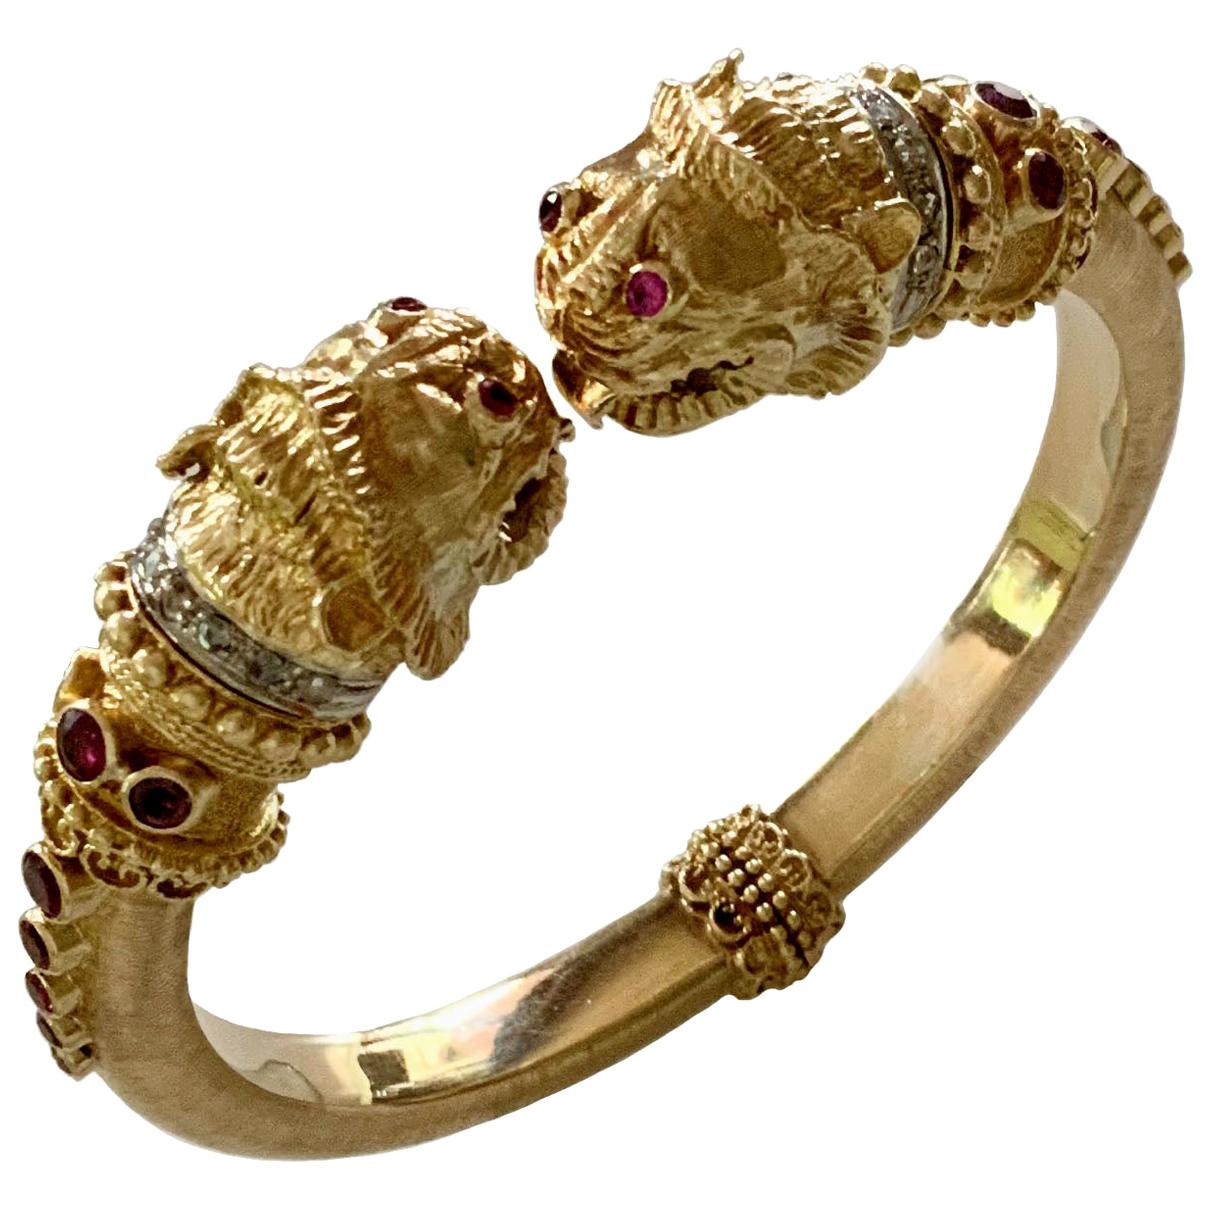 gold bracelet | gold bracelet for men | bracelet for men | bracelet design  | gold animals bracelet | lion face bracelet | gold